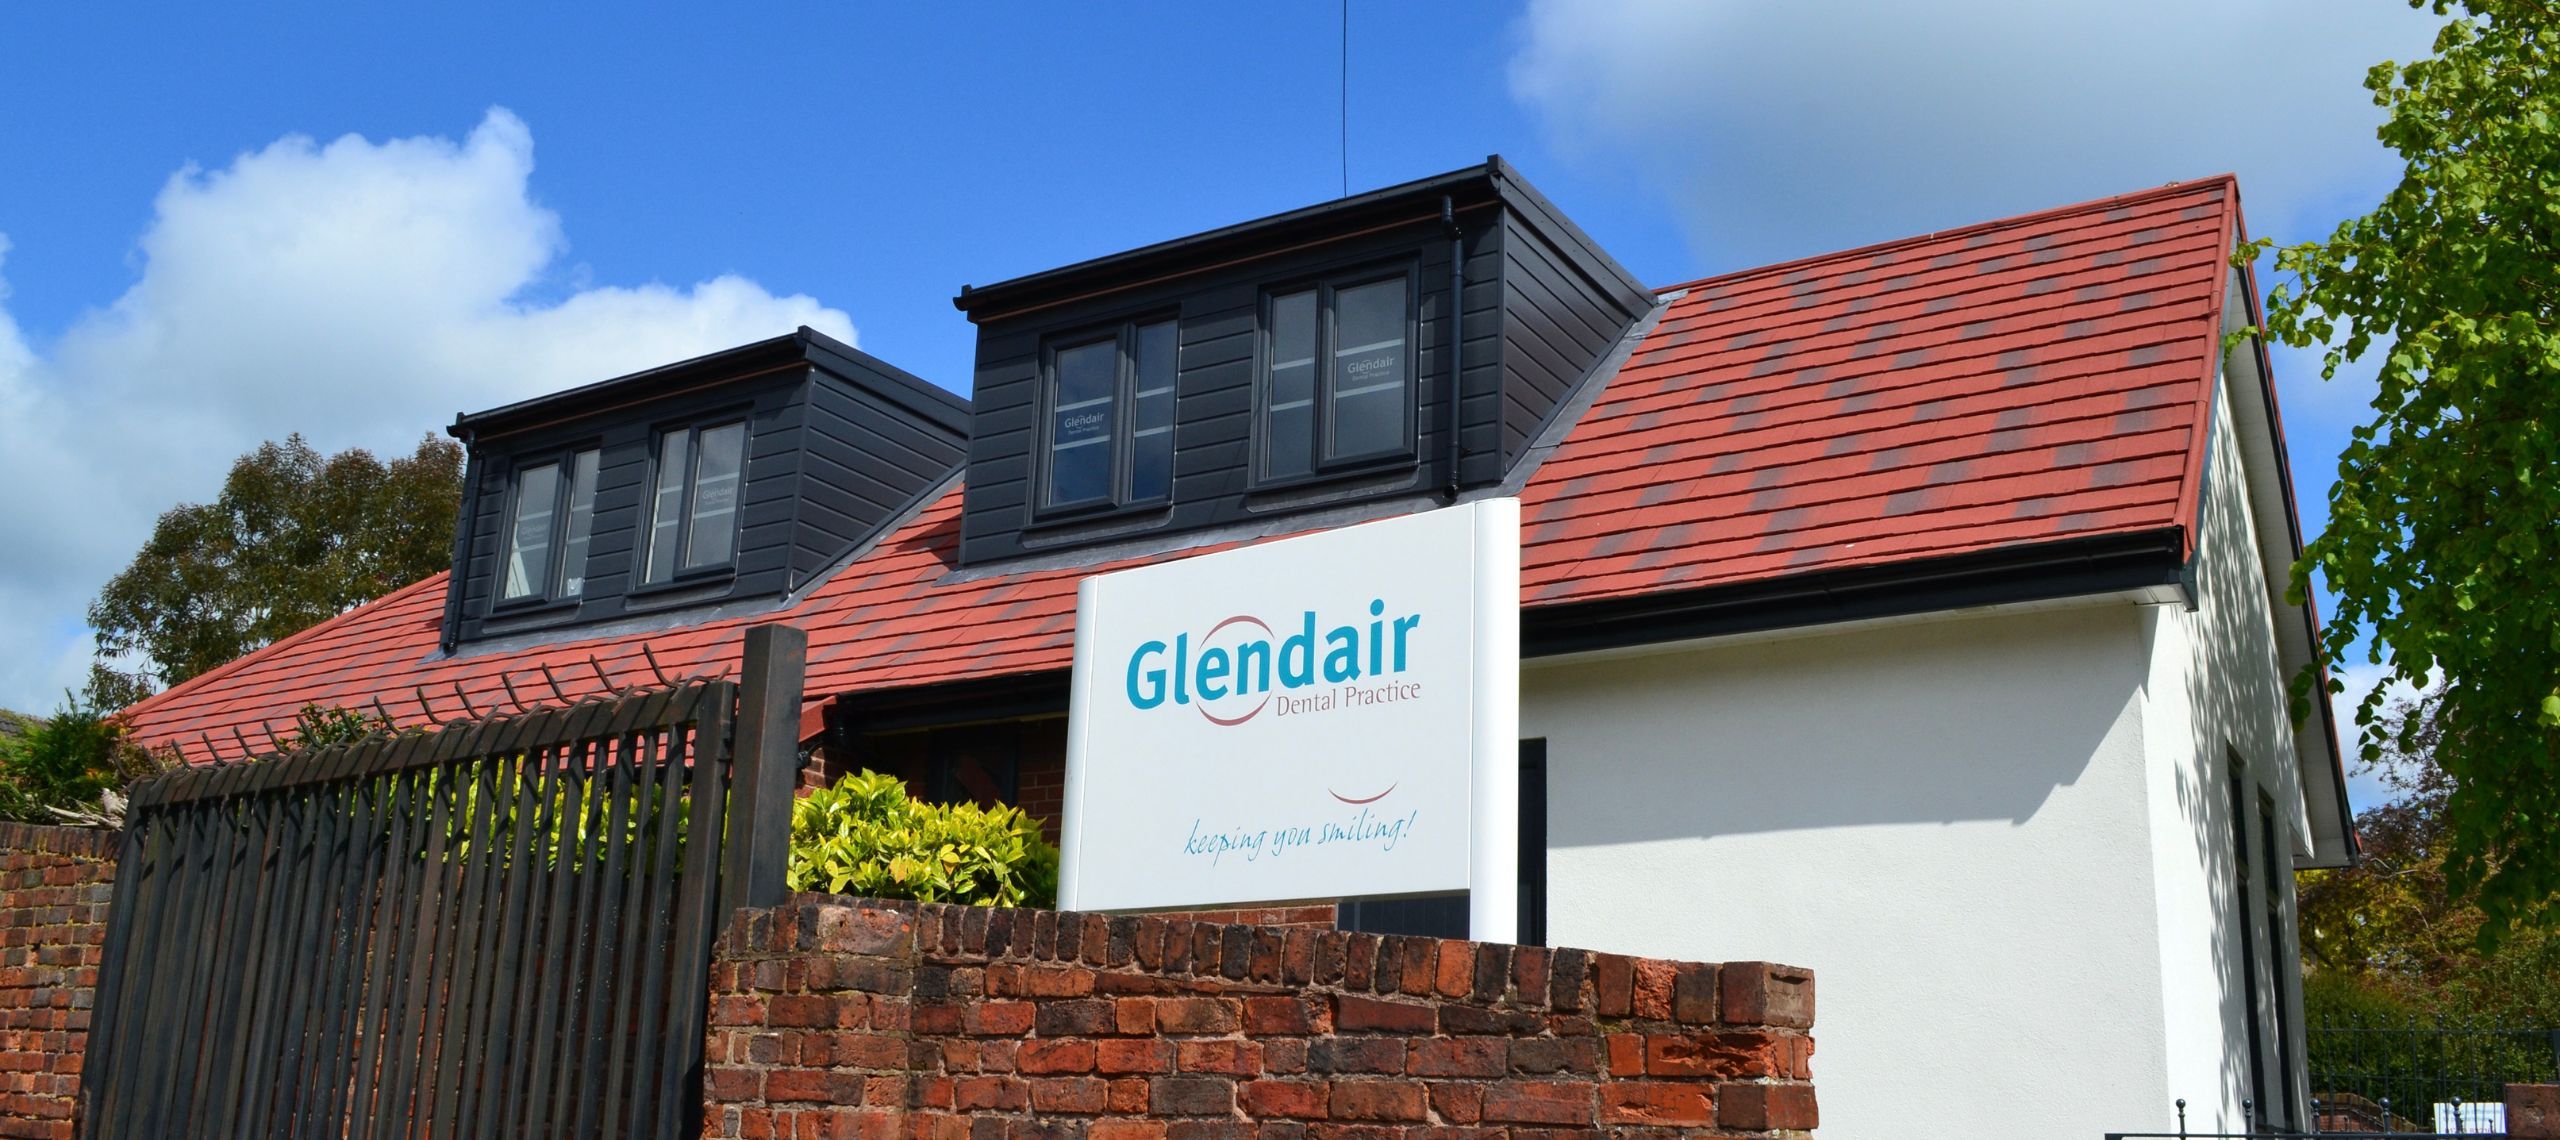 Glendair Dental Practice